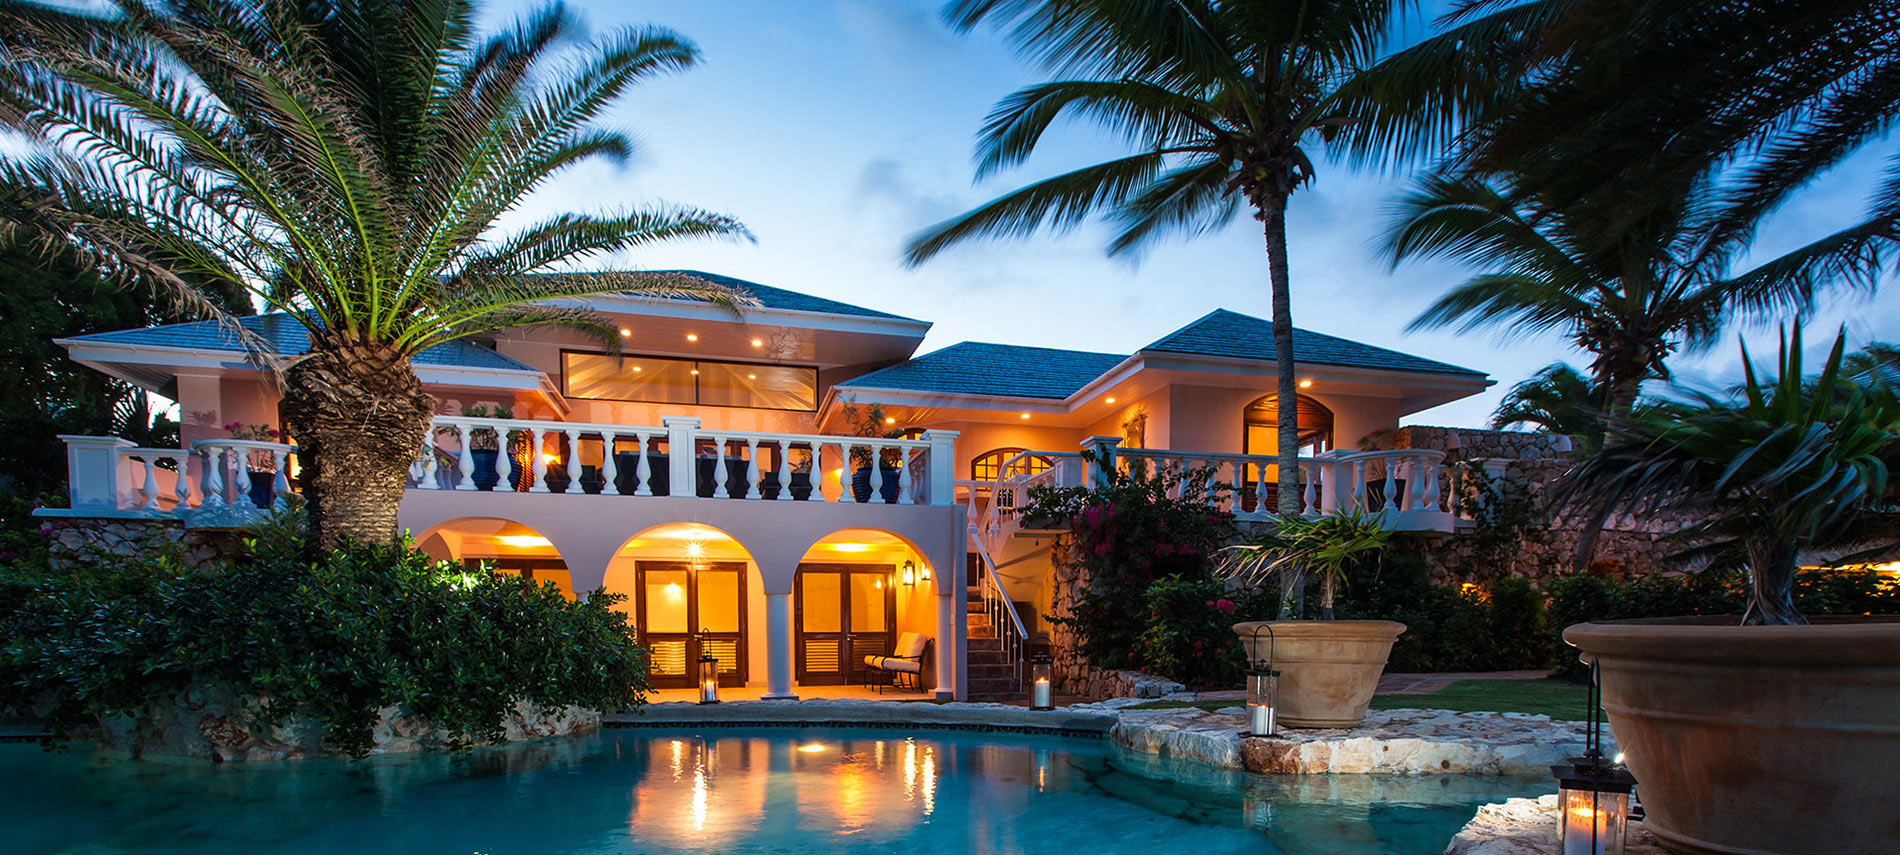 Anguilla luxury villa rentals at Indigo Villa – call Properties in Paradise for the perfect Anguilla island luxury villa rental
